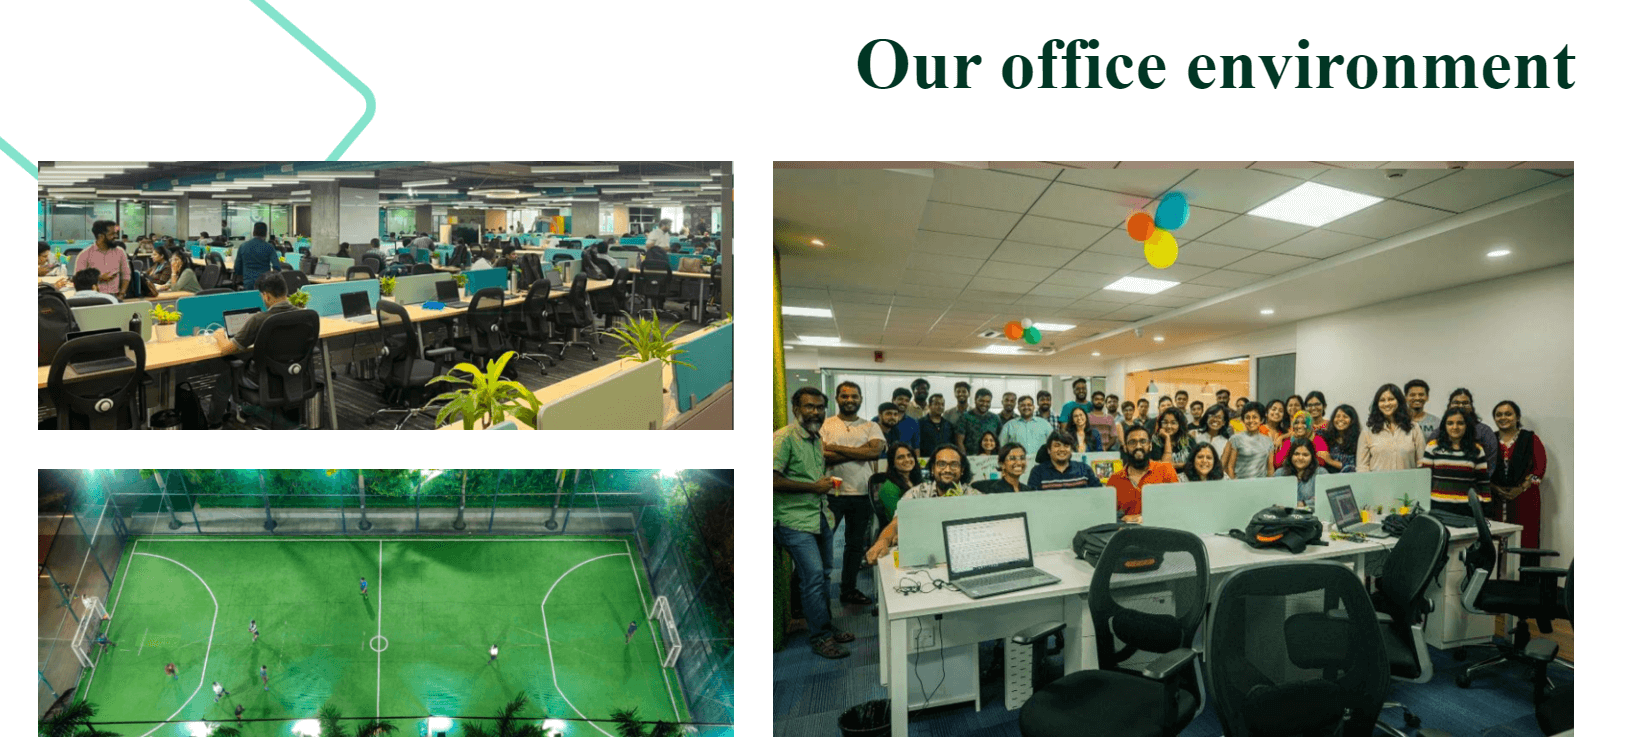 Figure 19 Office environment photos